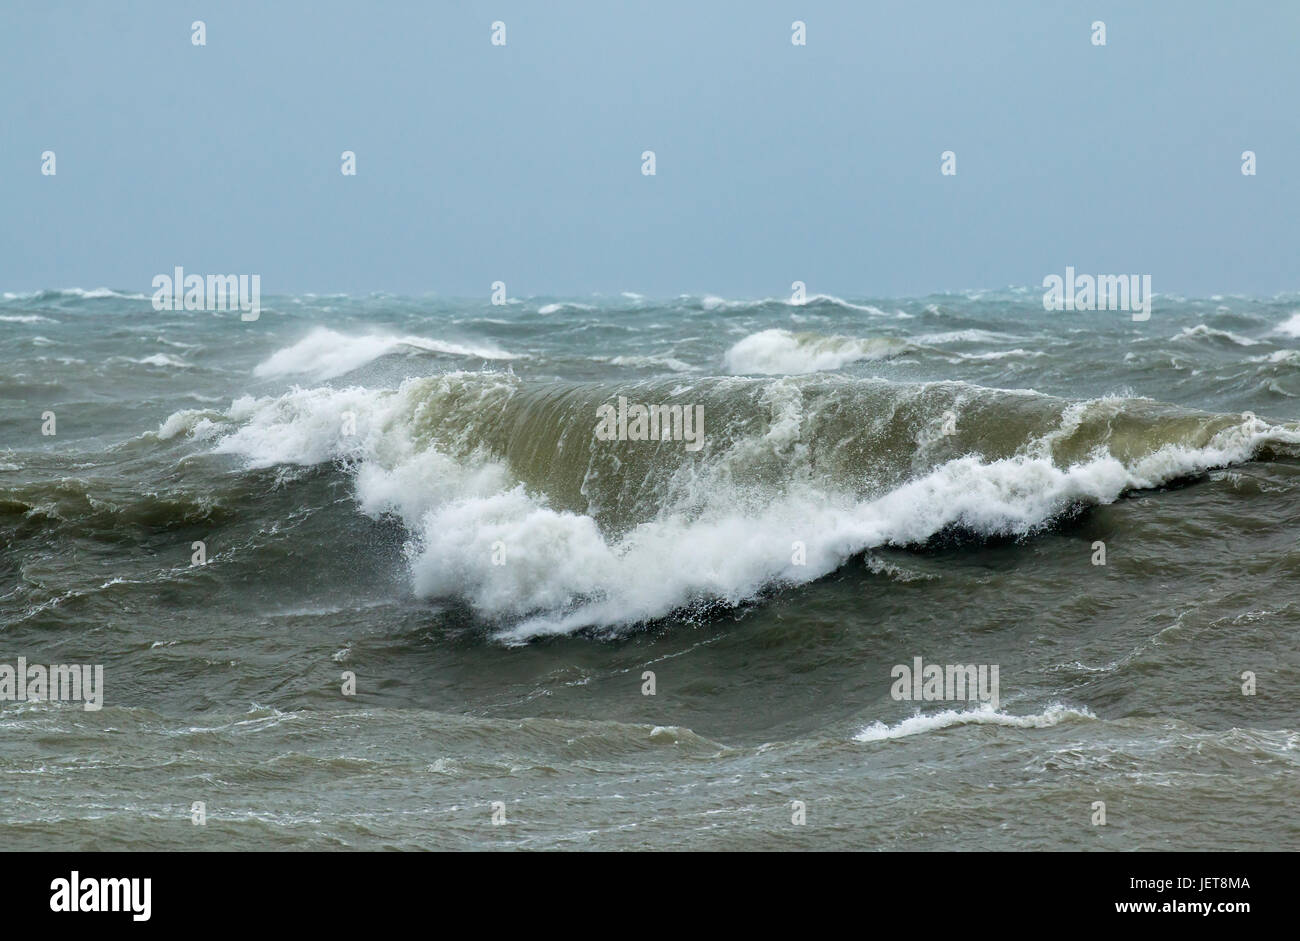 Mare mosso con onde che si infrangono in inglese canale off seaford in east sussex Foto Stock